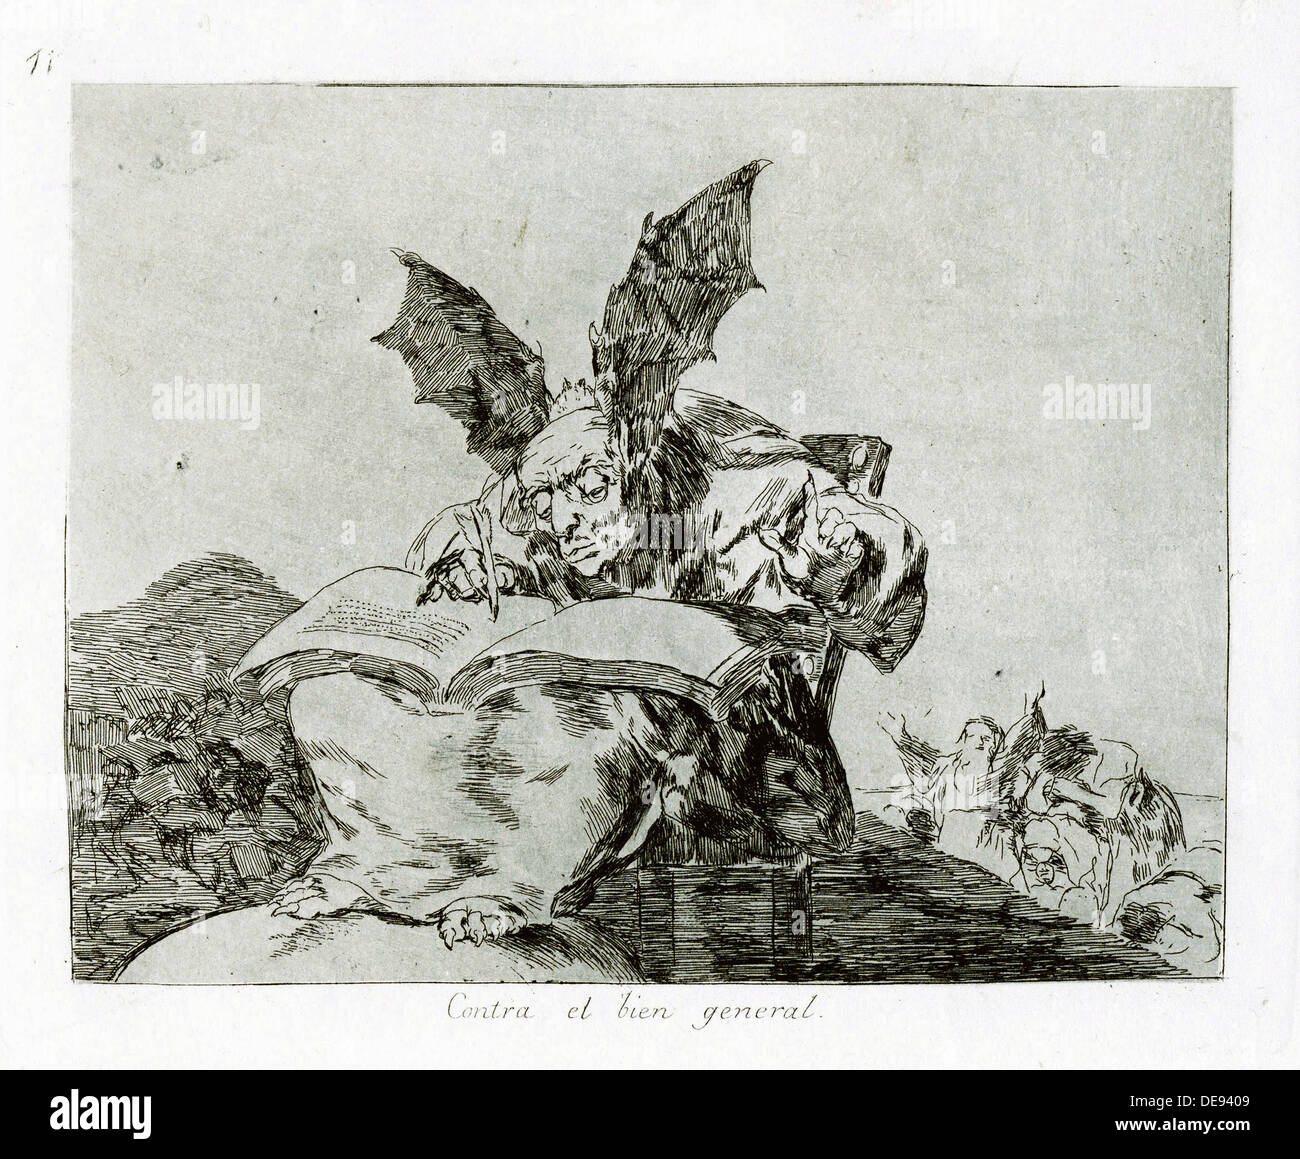 Contra el bien general (Against the common good). Plate 71 from The Disasters of War (Los Desastros de la Guerra), 1810-1820. Artist: Goya, Francisco, Stock Photo